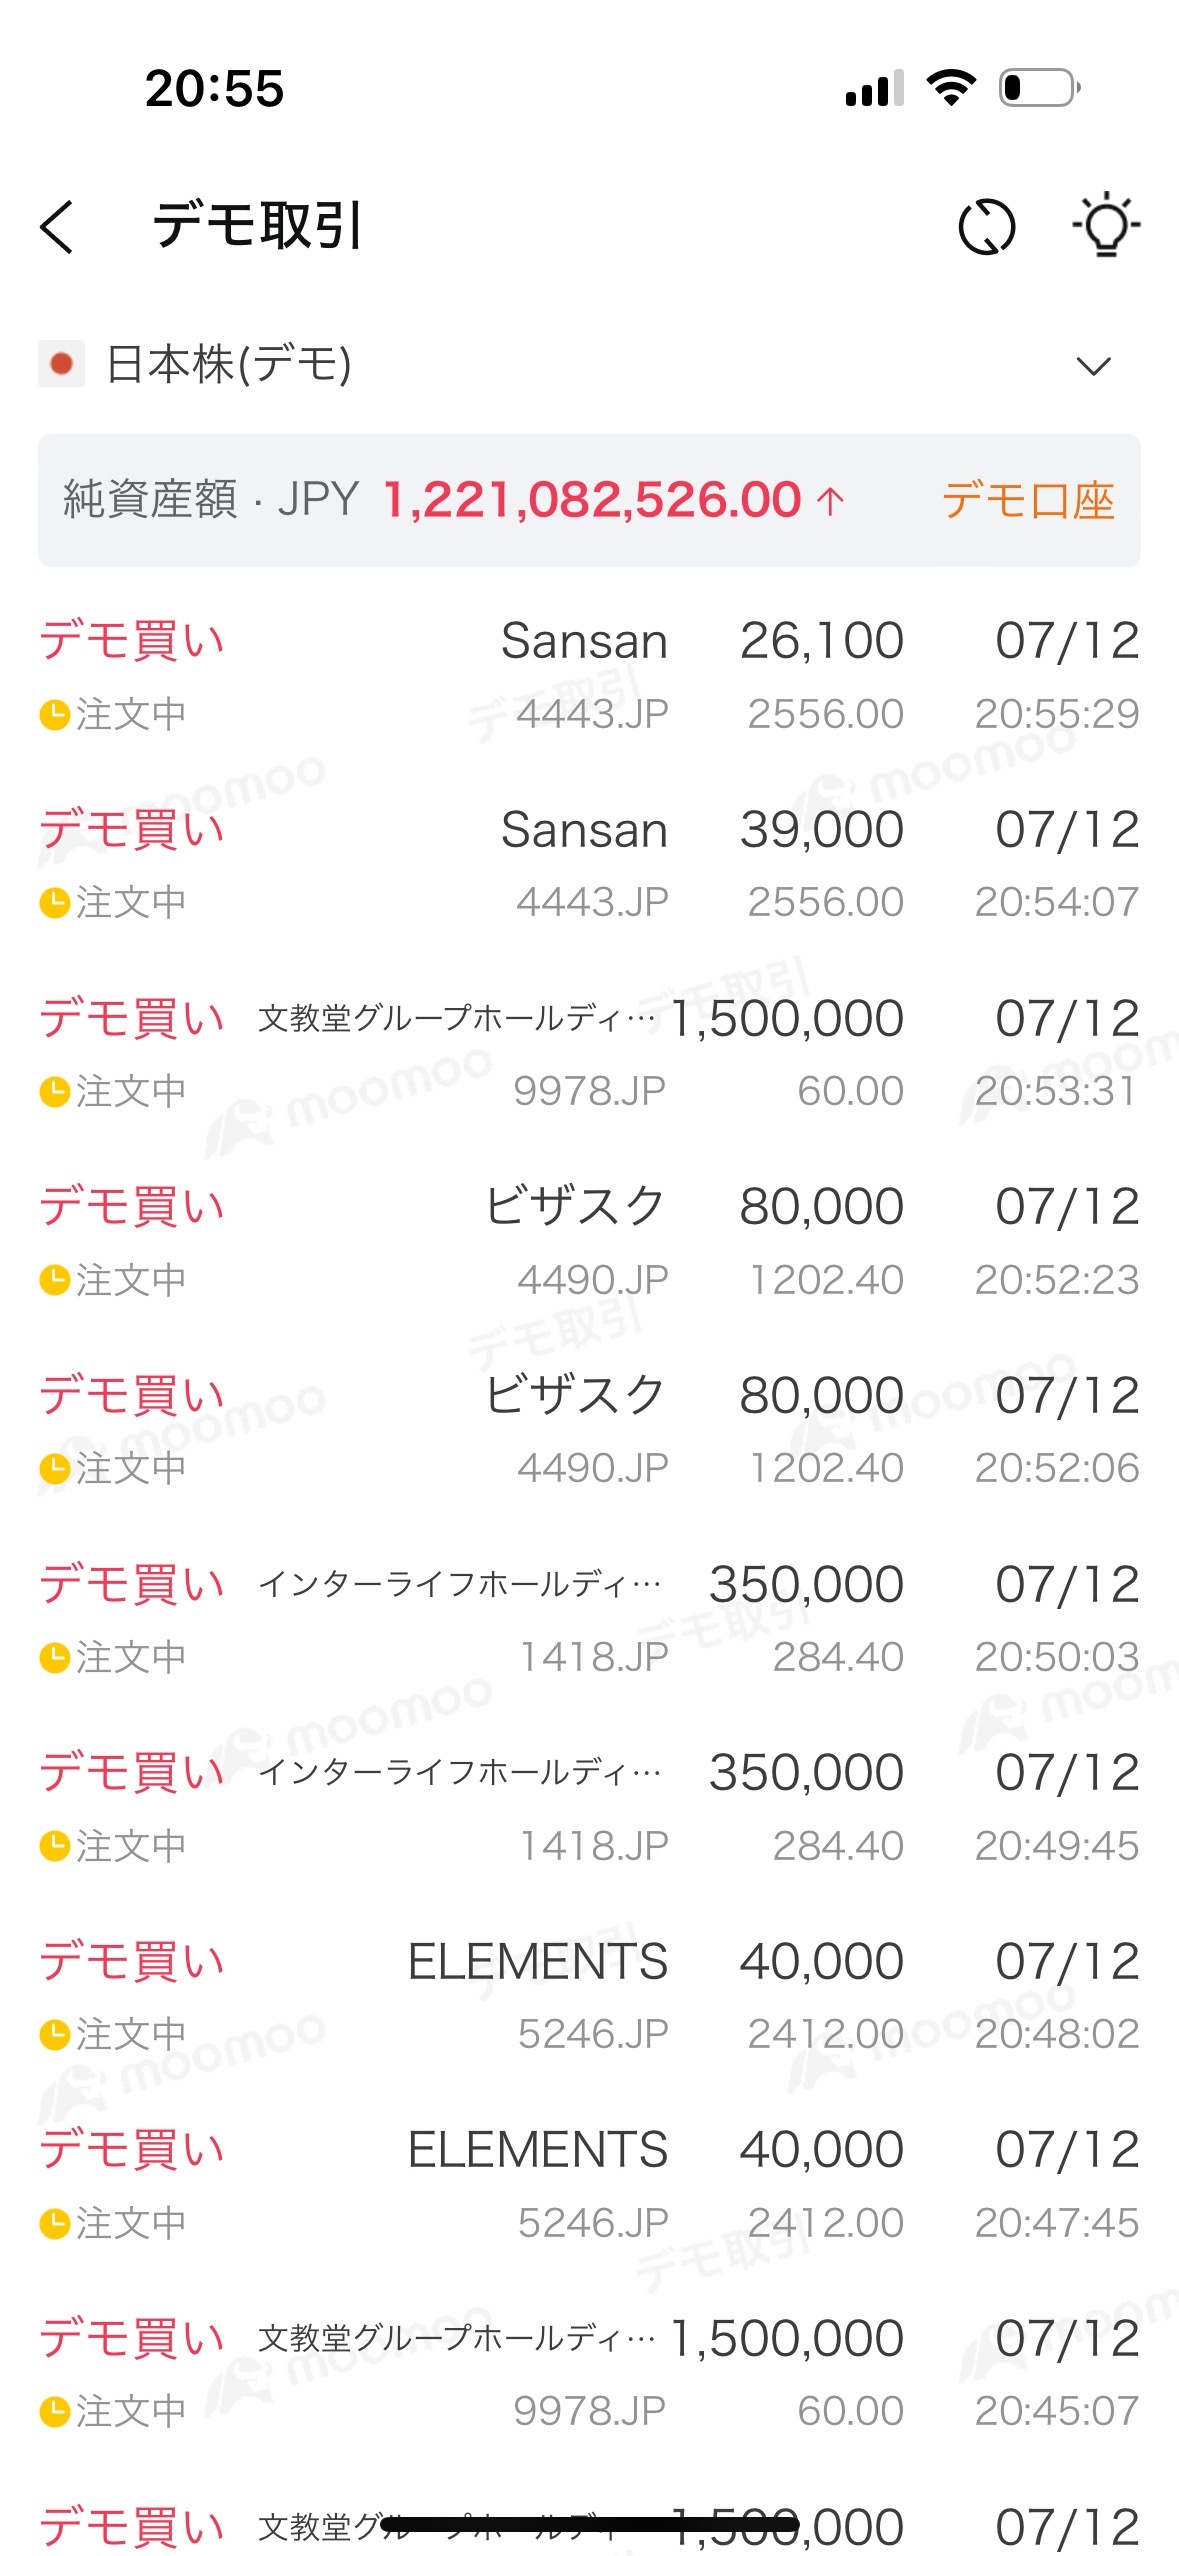 Sansan bought more. Bunkyō, Elements, Bisask, and Interlife 4 games